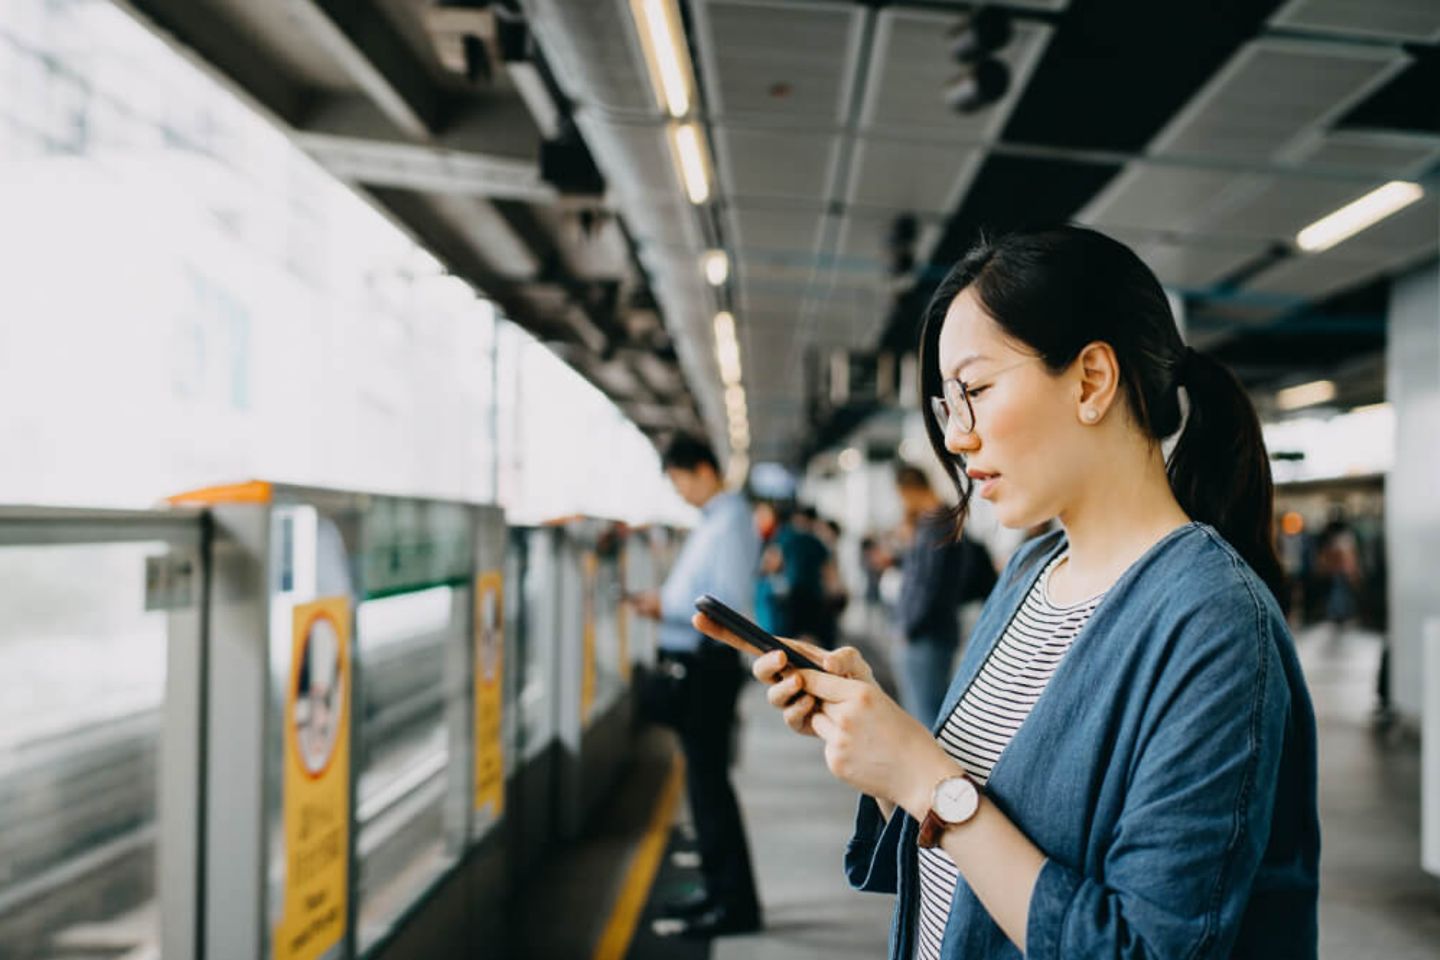 Woman using mobile phone in subway station platform